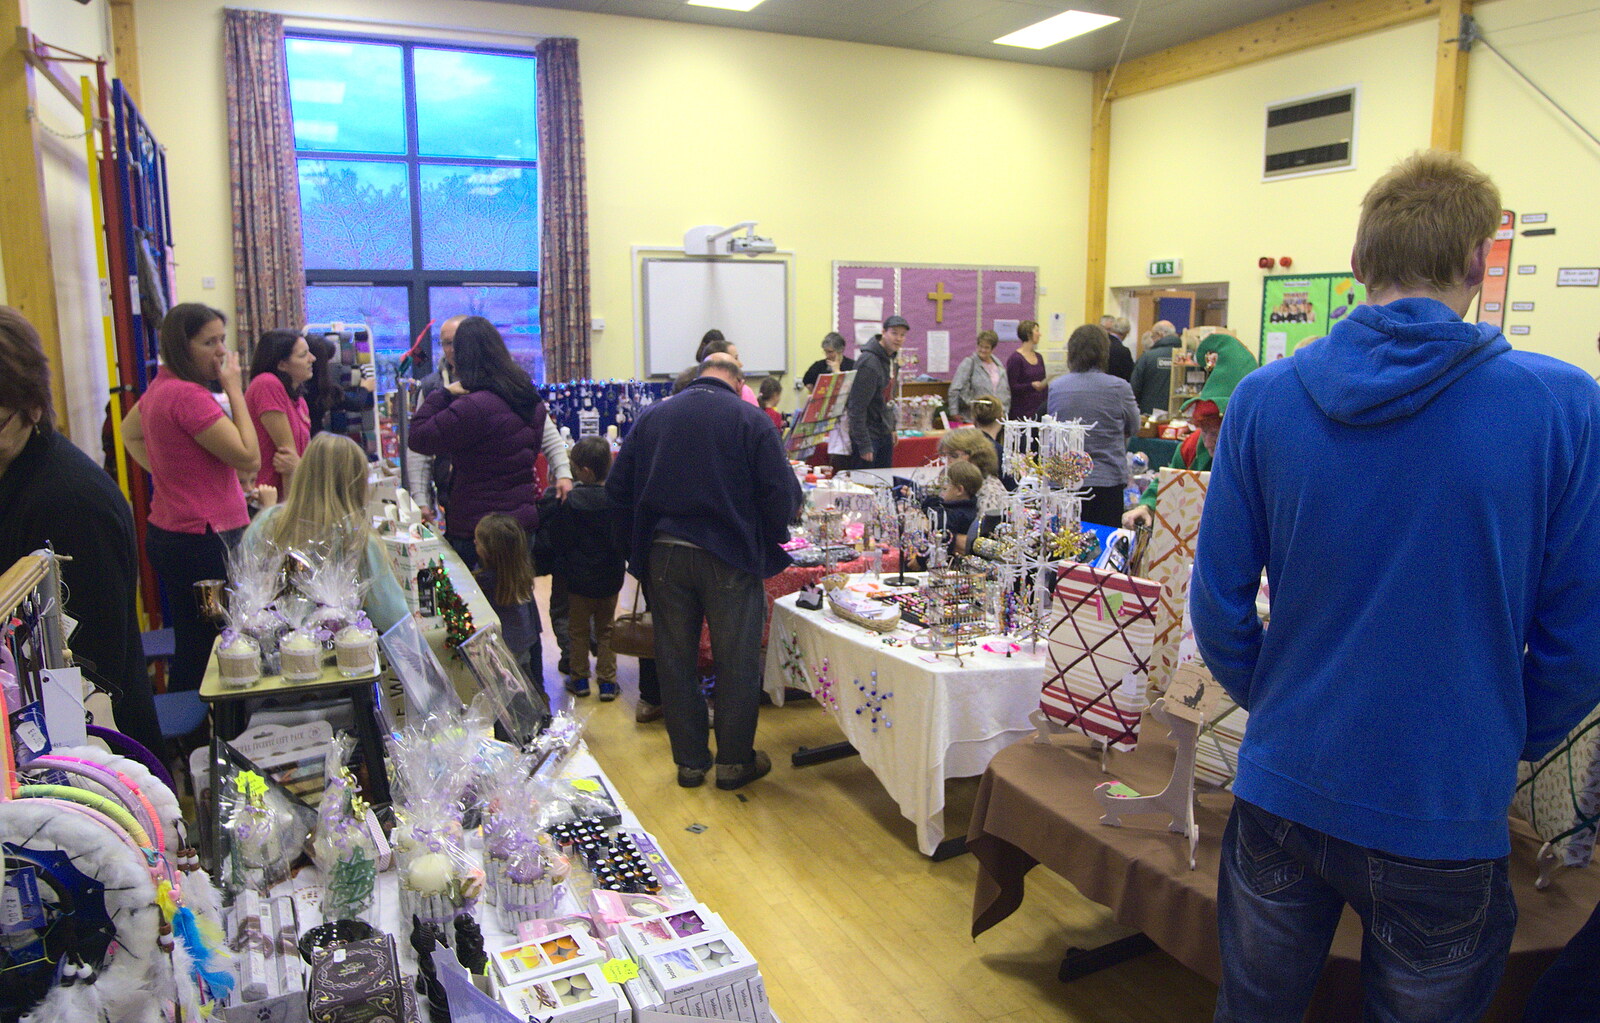 Craft fair in Gislingham school from November Singing, Gislingham Primary School, Suffolk - 17th November 2014